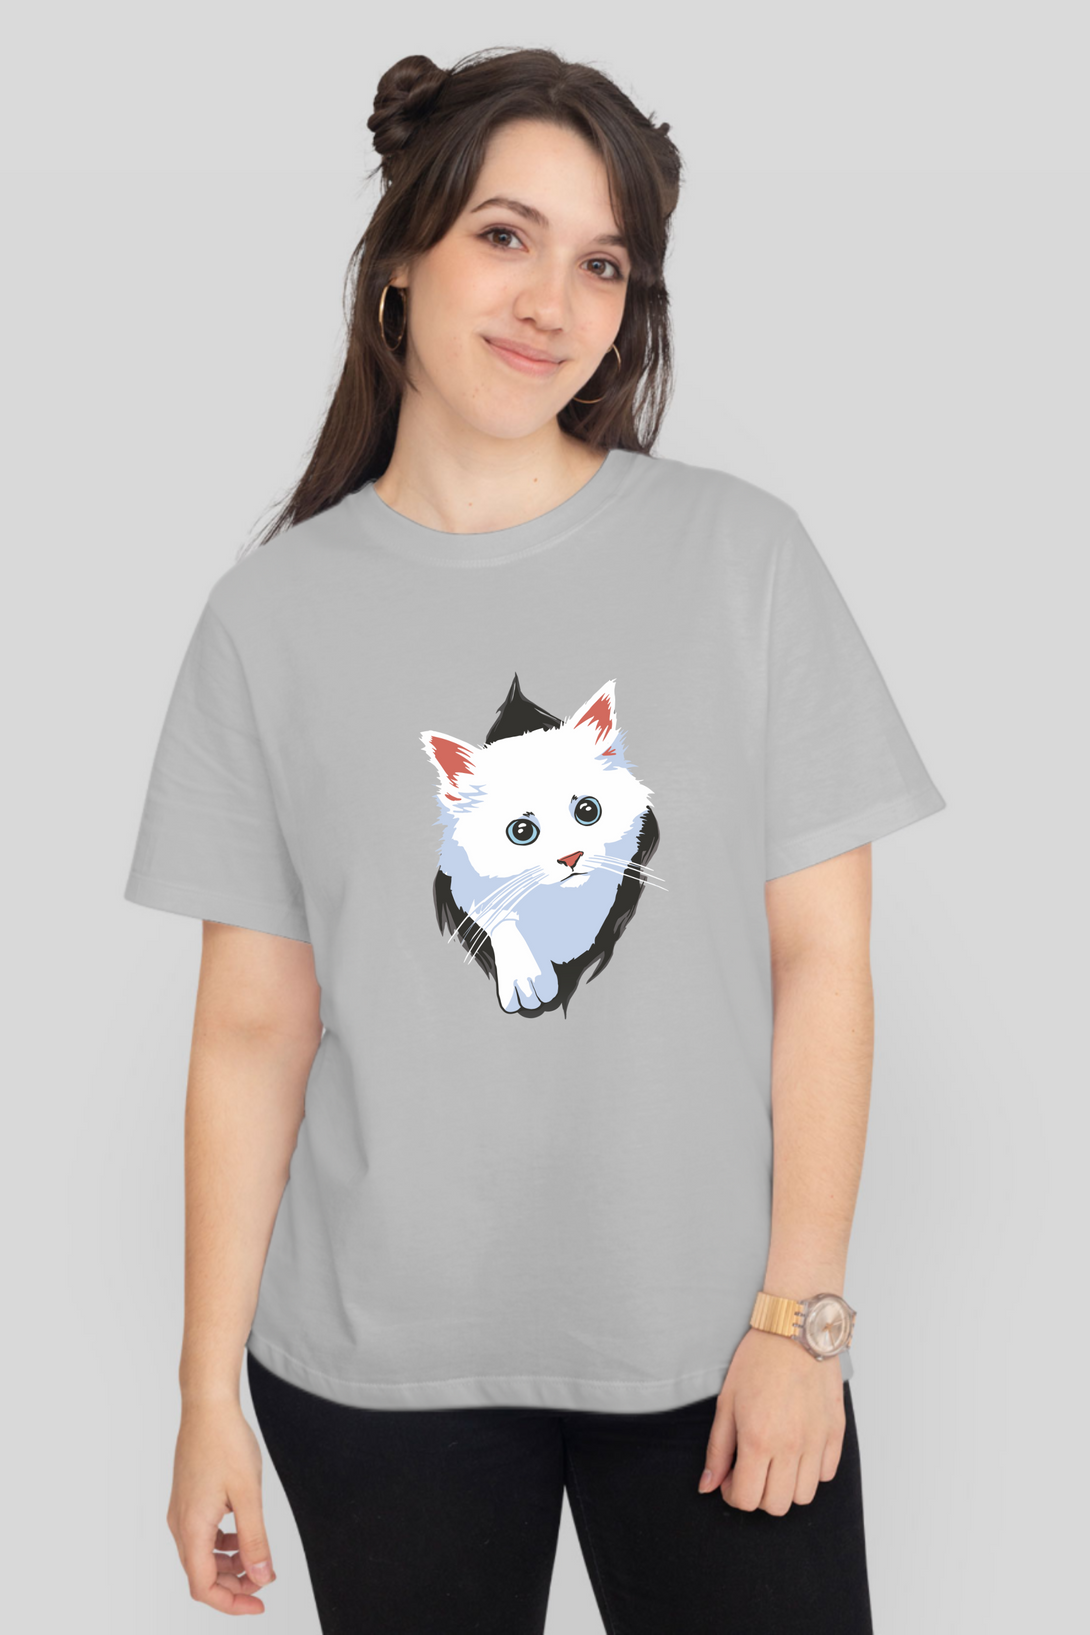 White Cat Printed T-Shirt For Women - WowWaves - 8